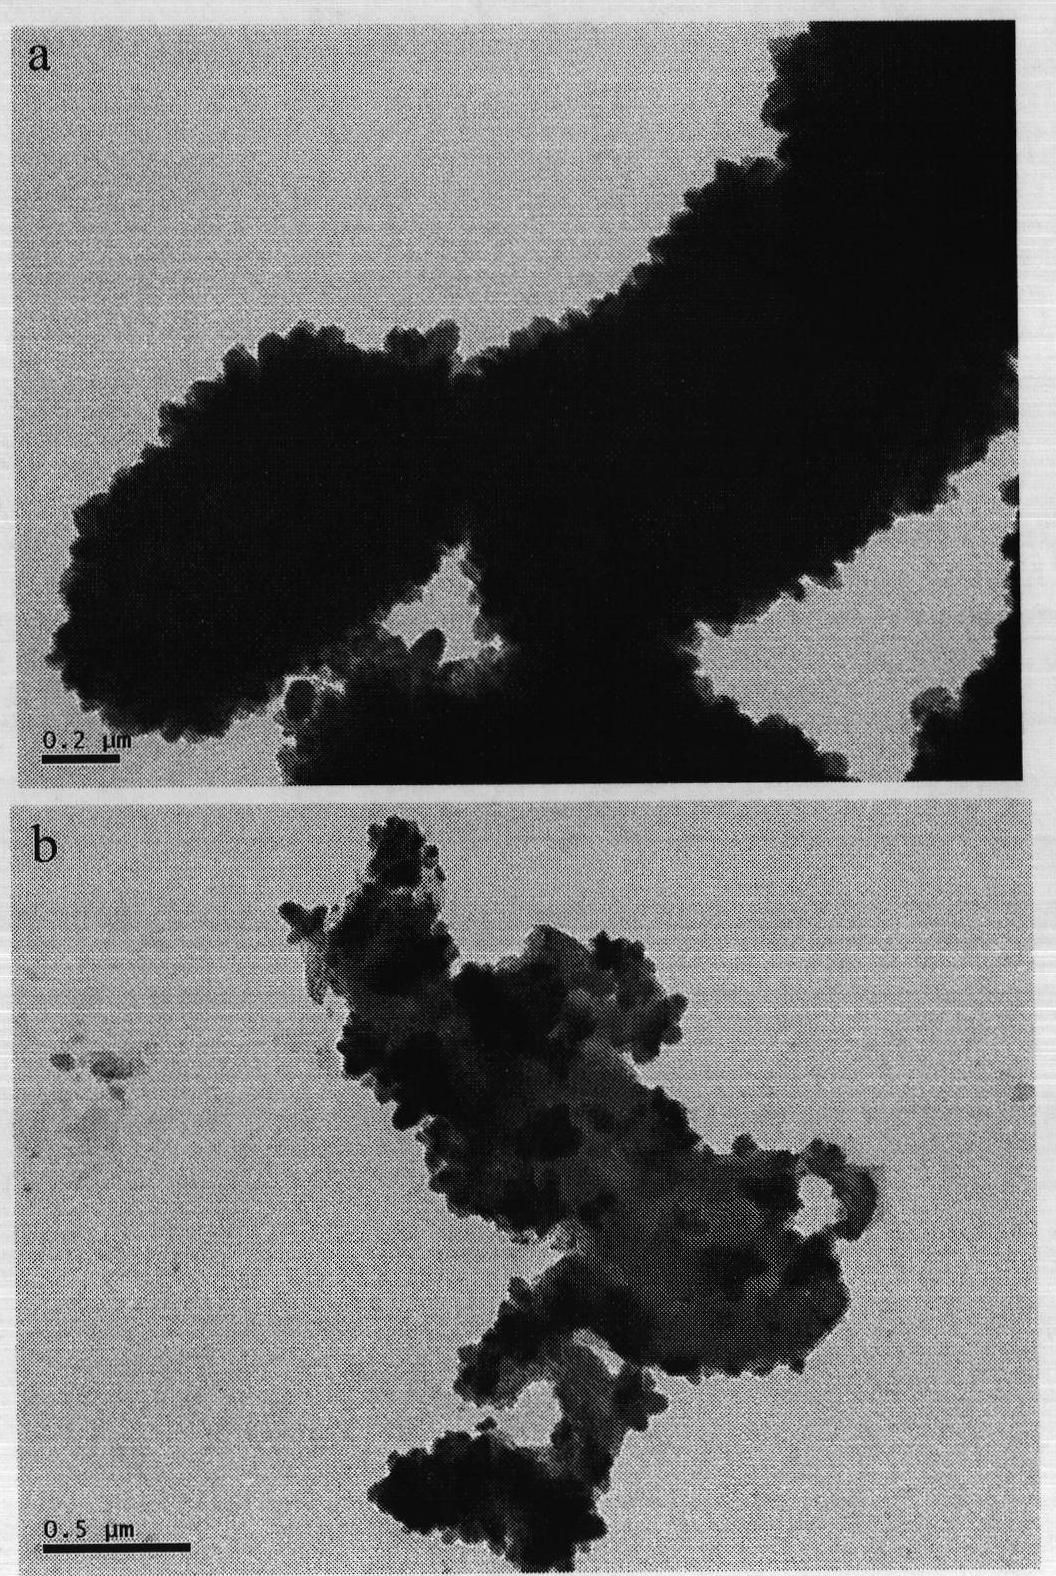 Method for preparing titanium dioxide/mesoporous carbon composite photocatalyst by electron beam irradiation